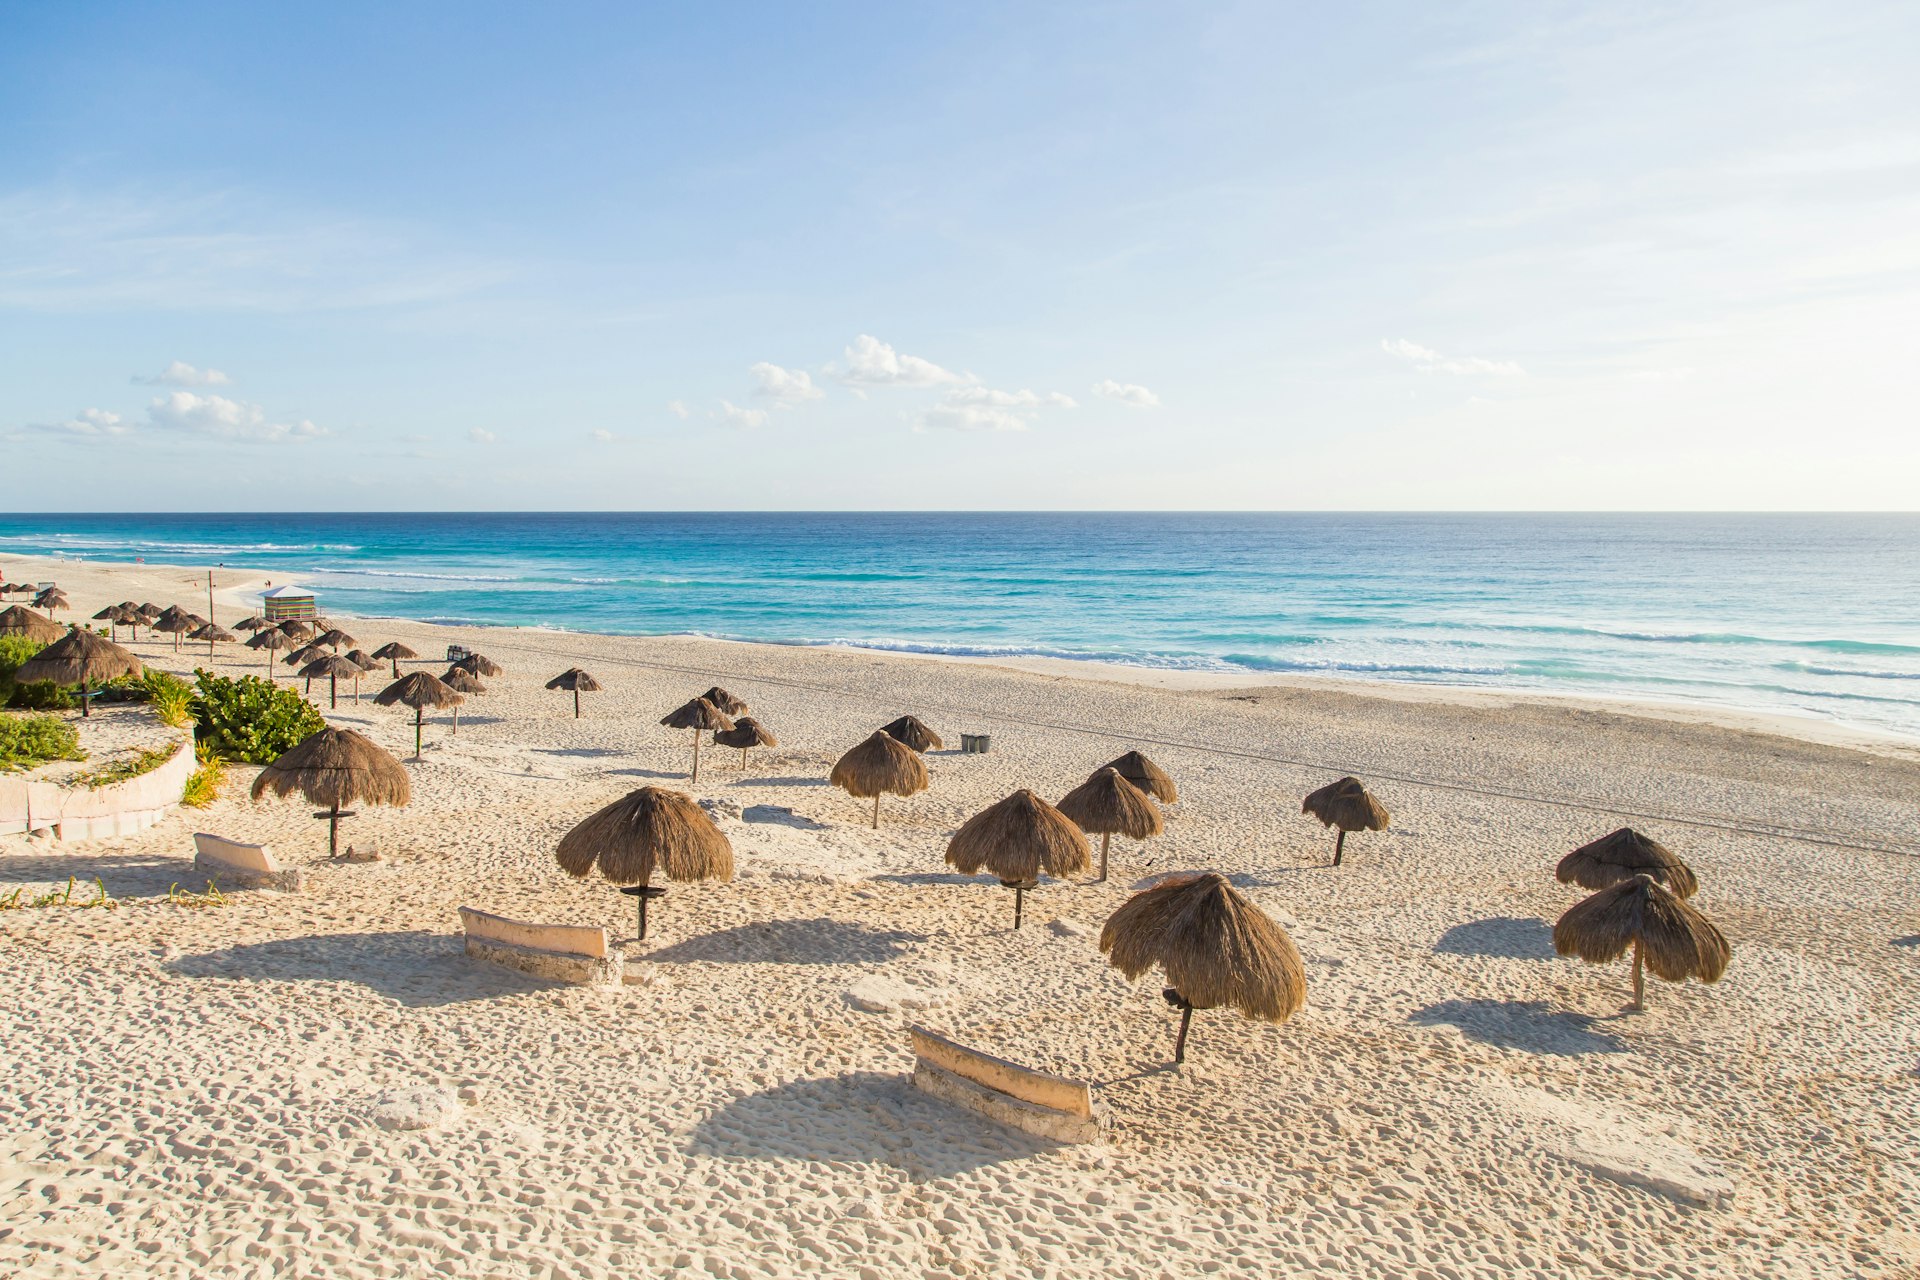 Beautiful beach on the Caribbean coast. Zona hotelera, Playa Delfines, Cancun, Mexico